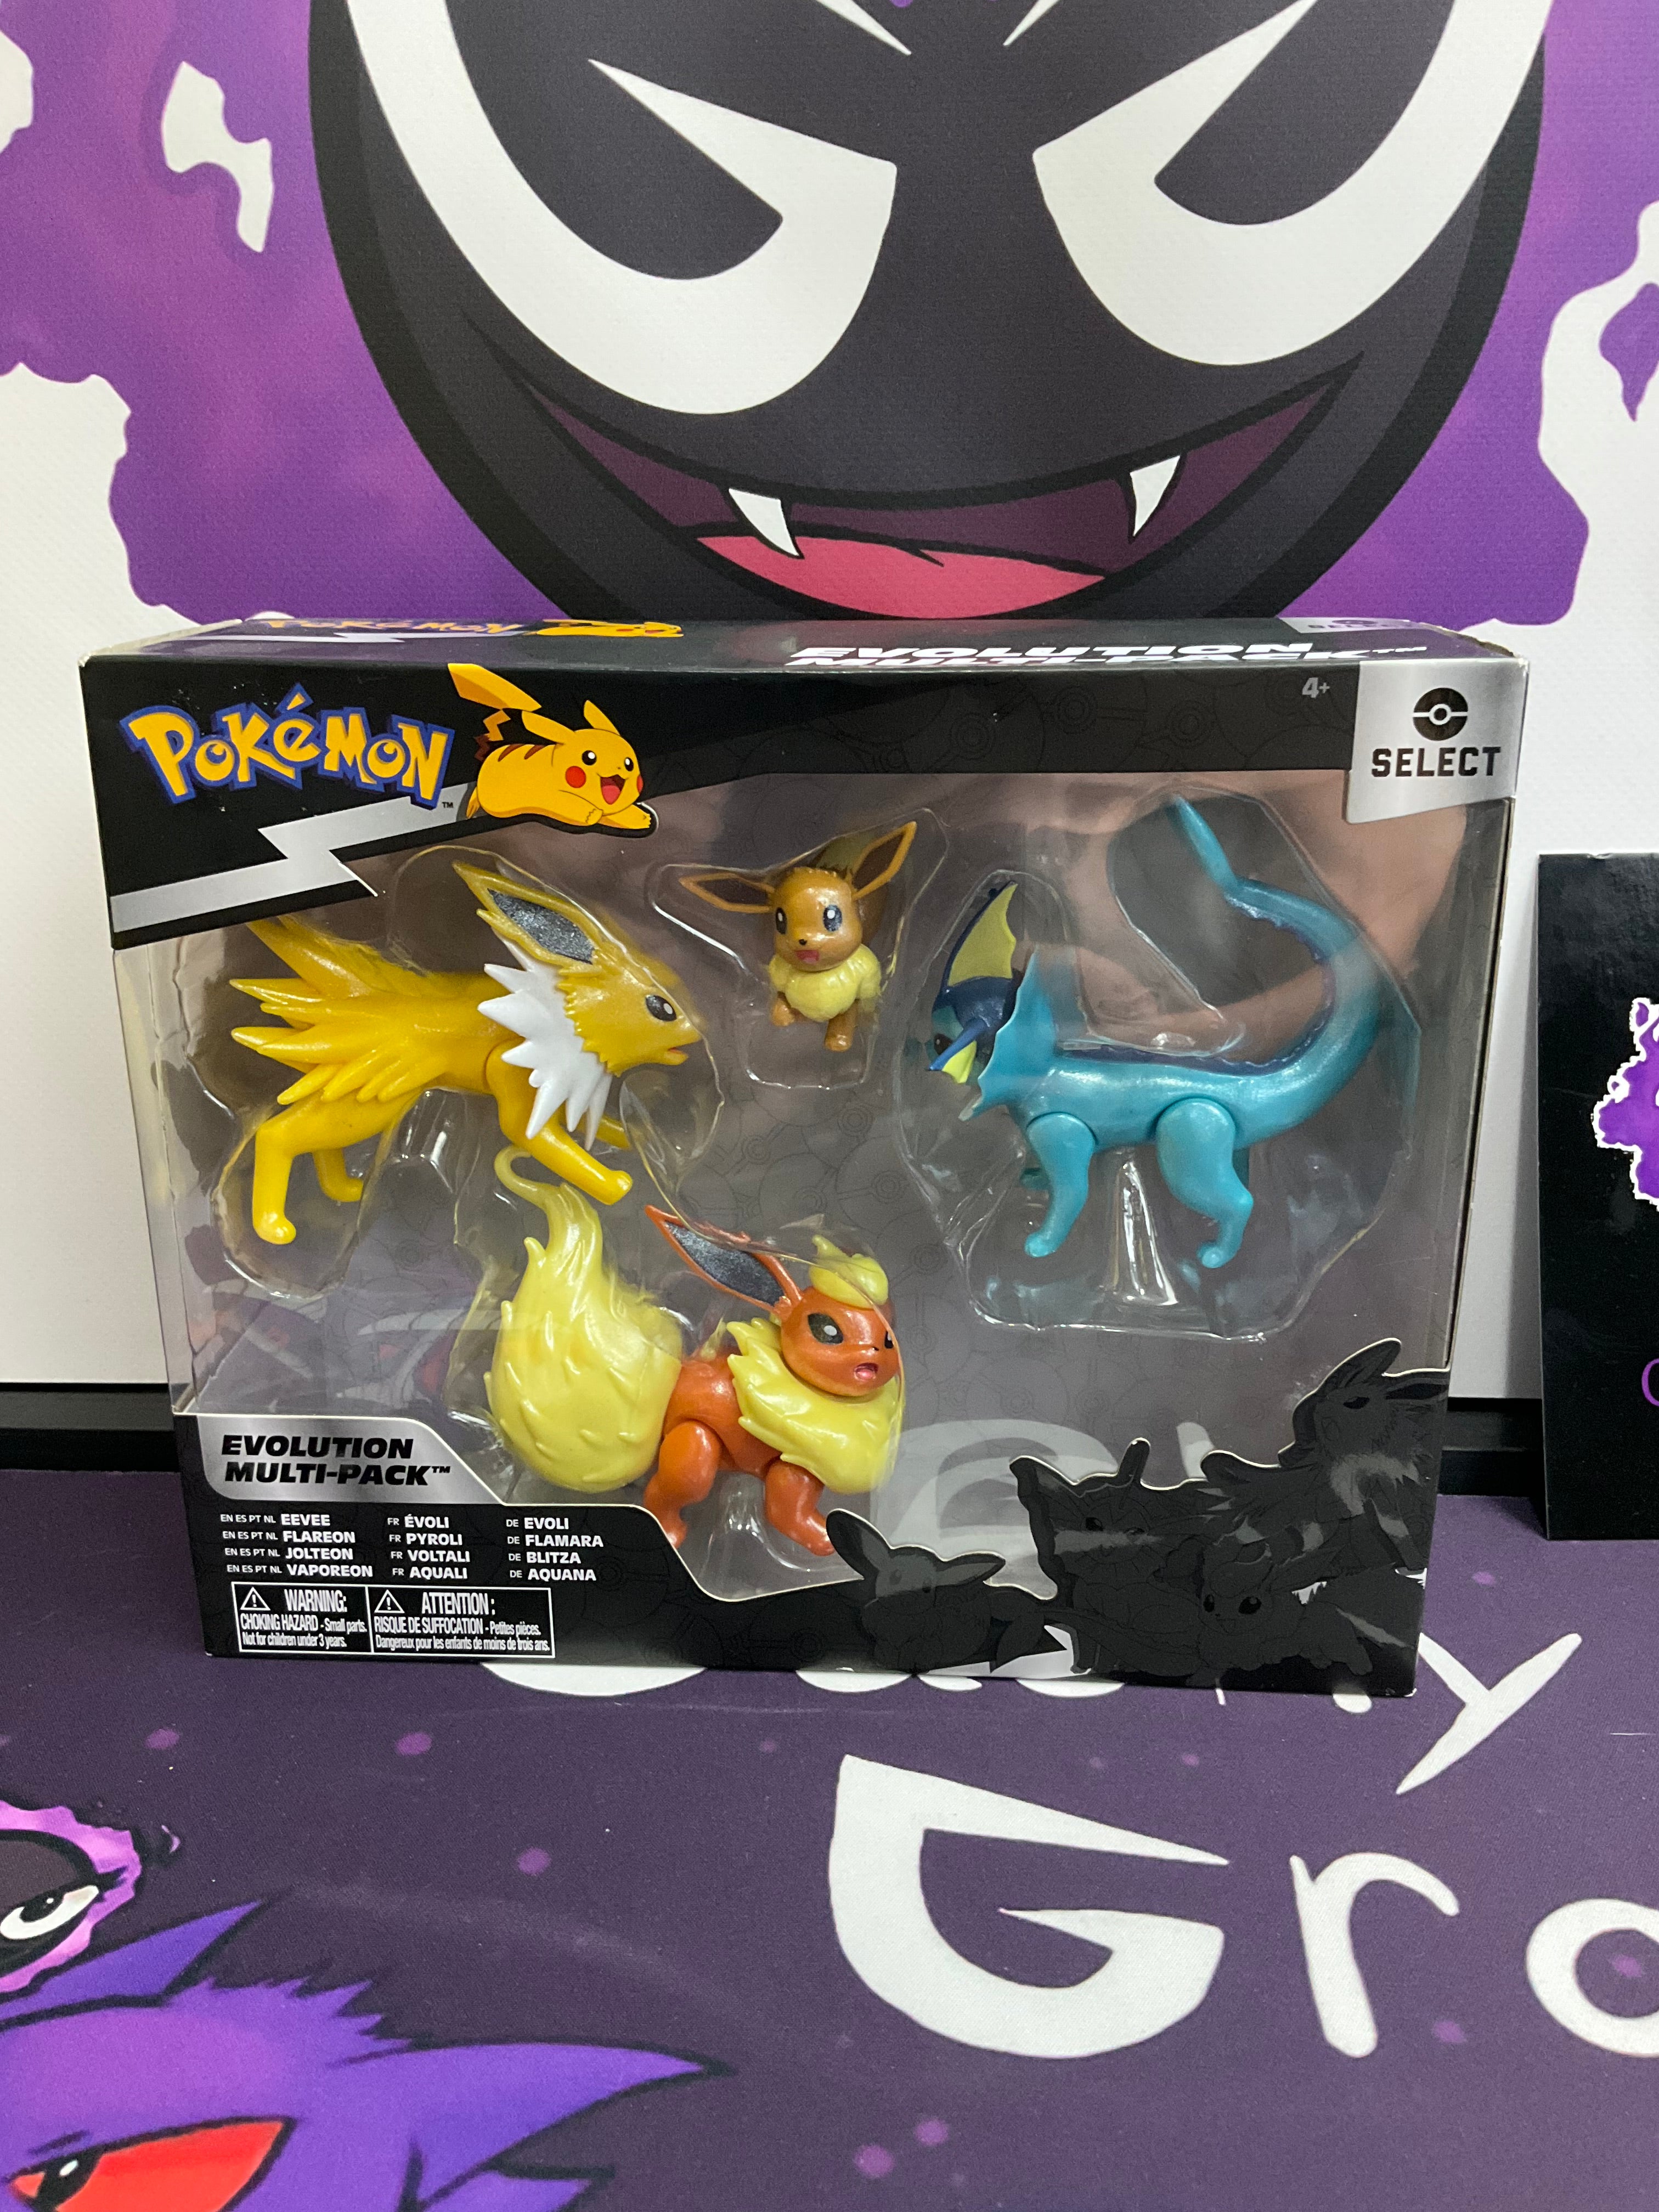 Pokemon Go Eevee Evolution Family Action Figure Toys(3-Pack) - 2